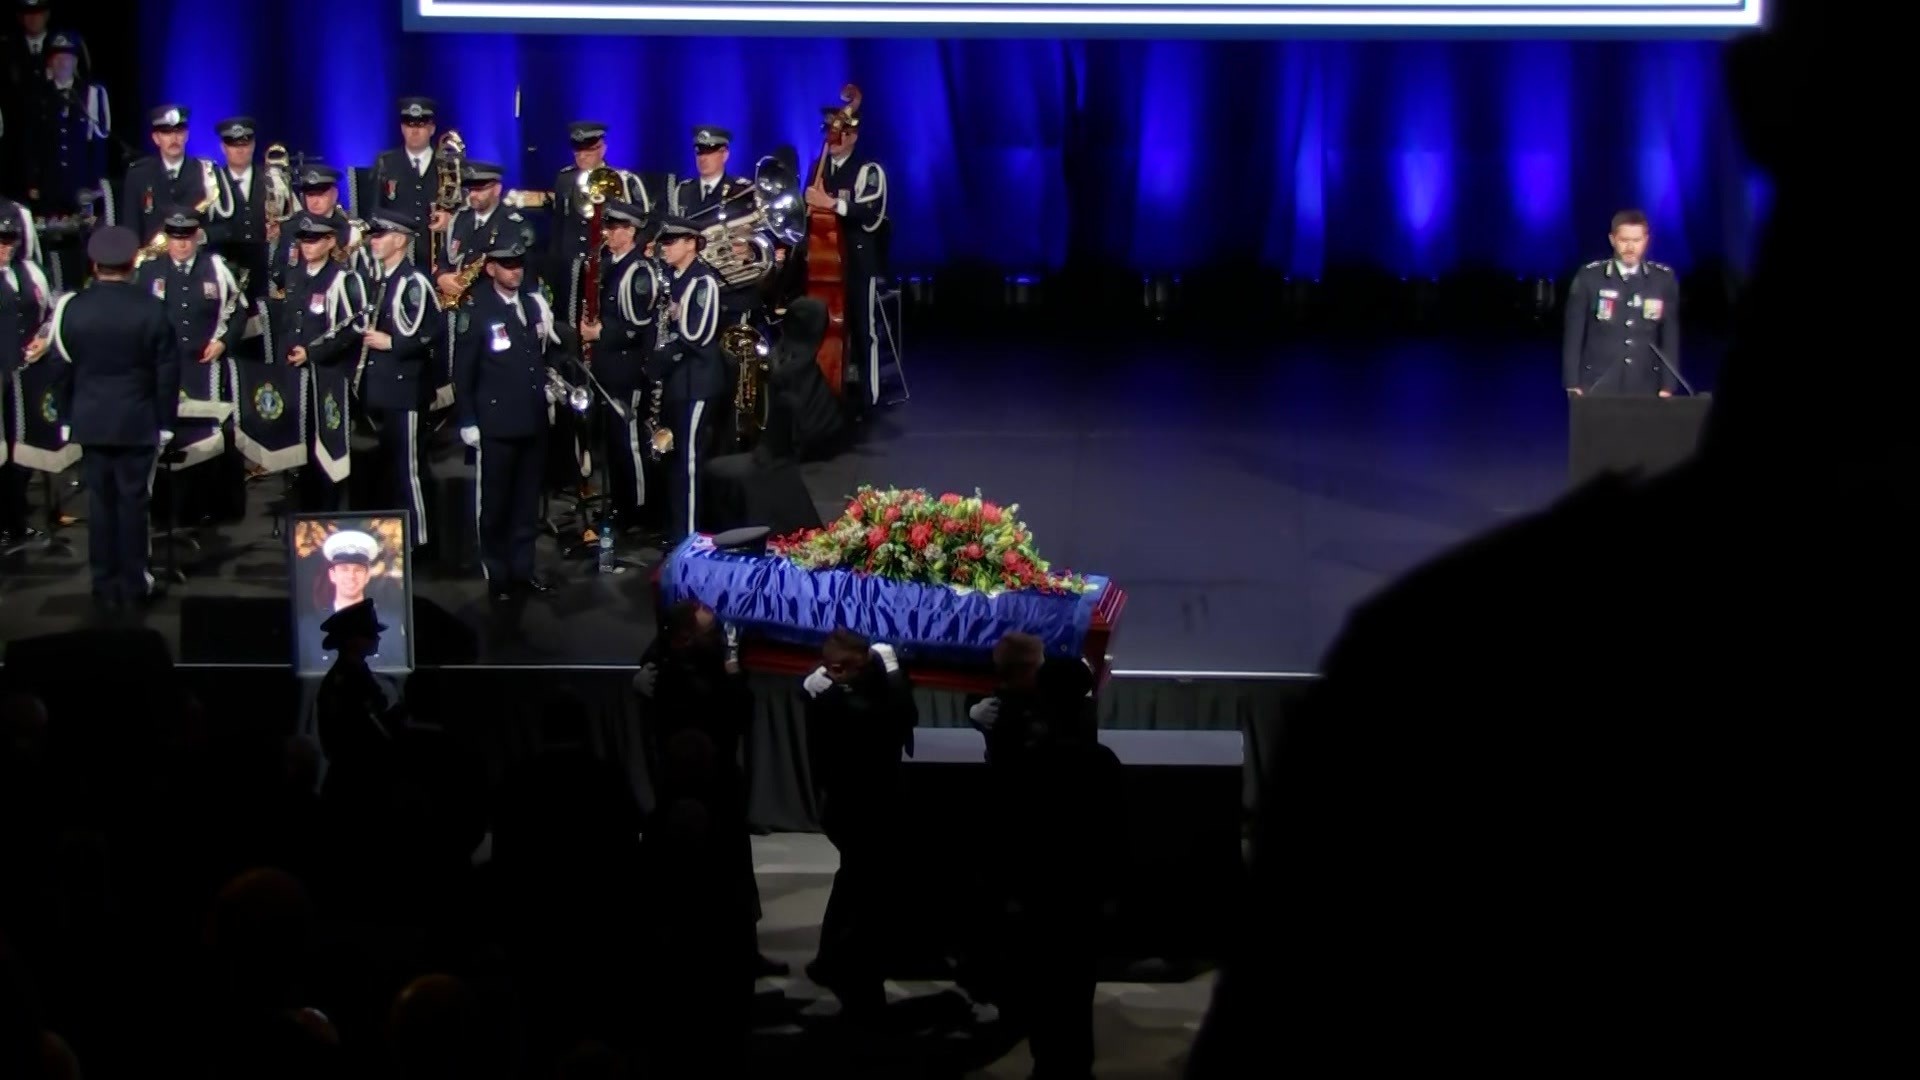 Six officers carry a casket